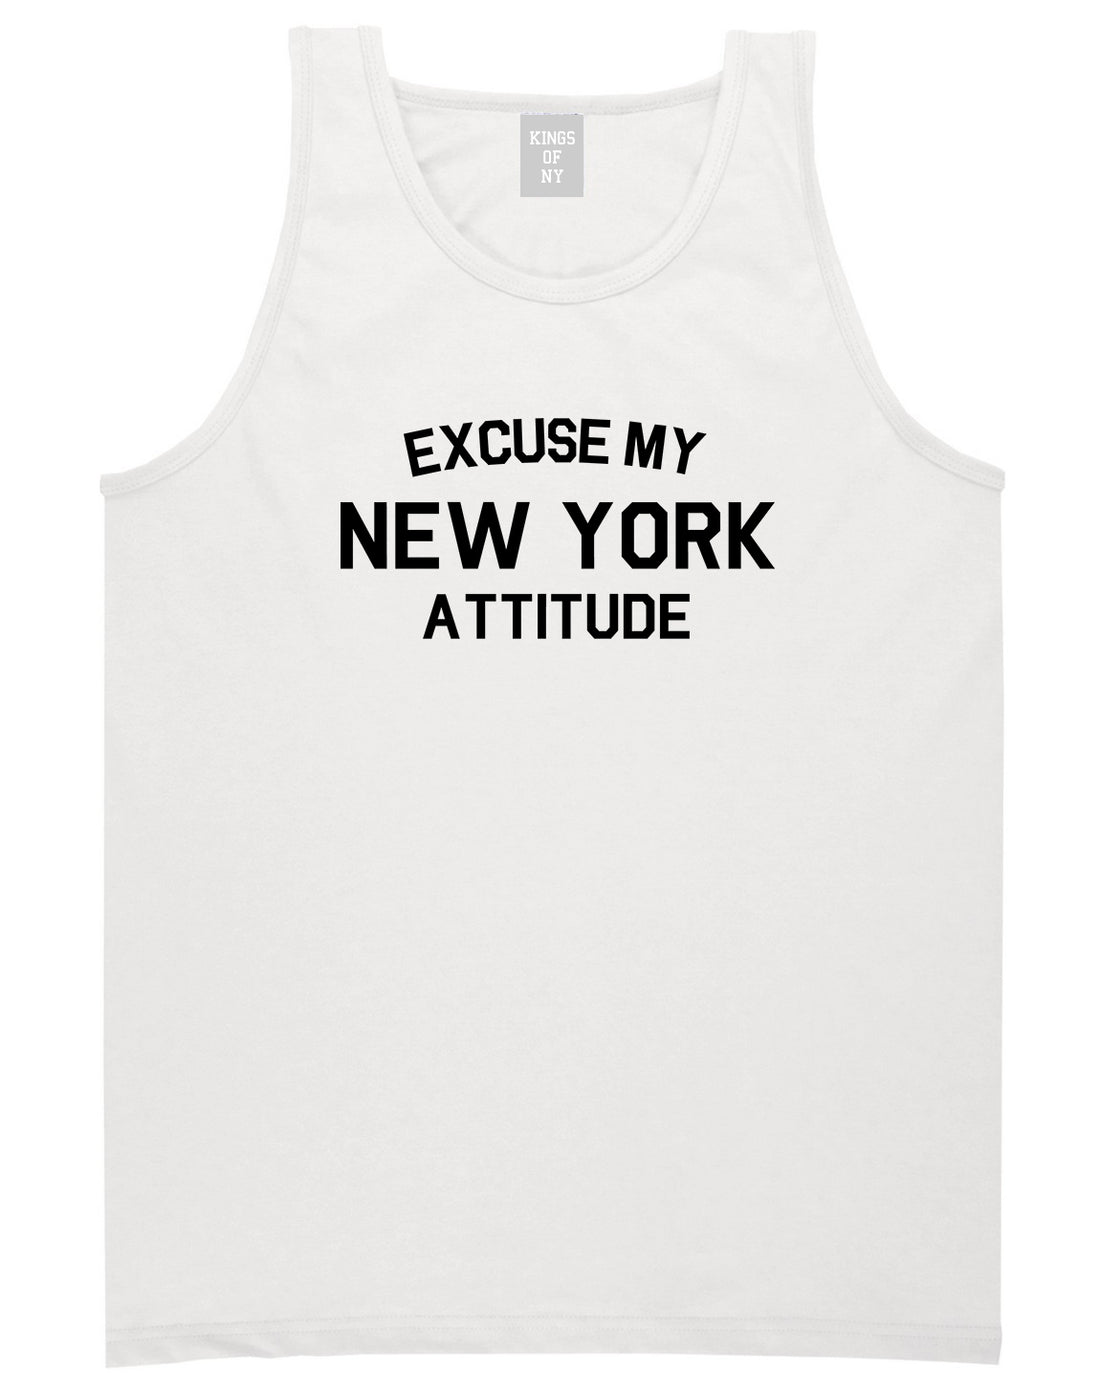 Excuse My New York Attitude Mens Tank Top Shirt White